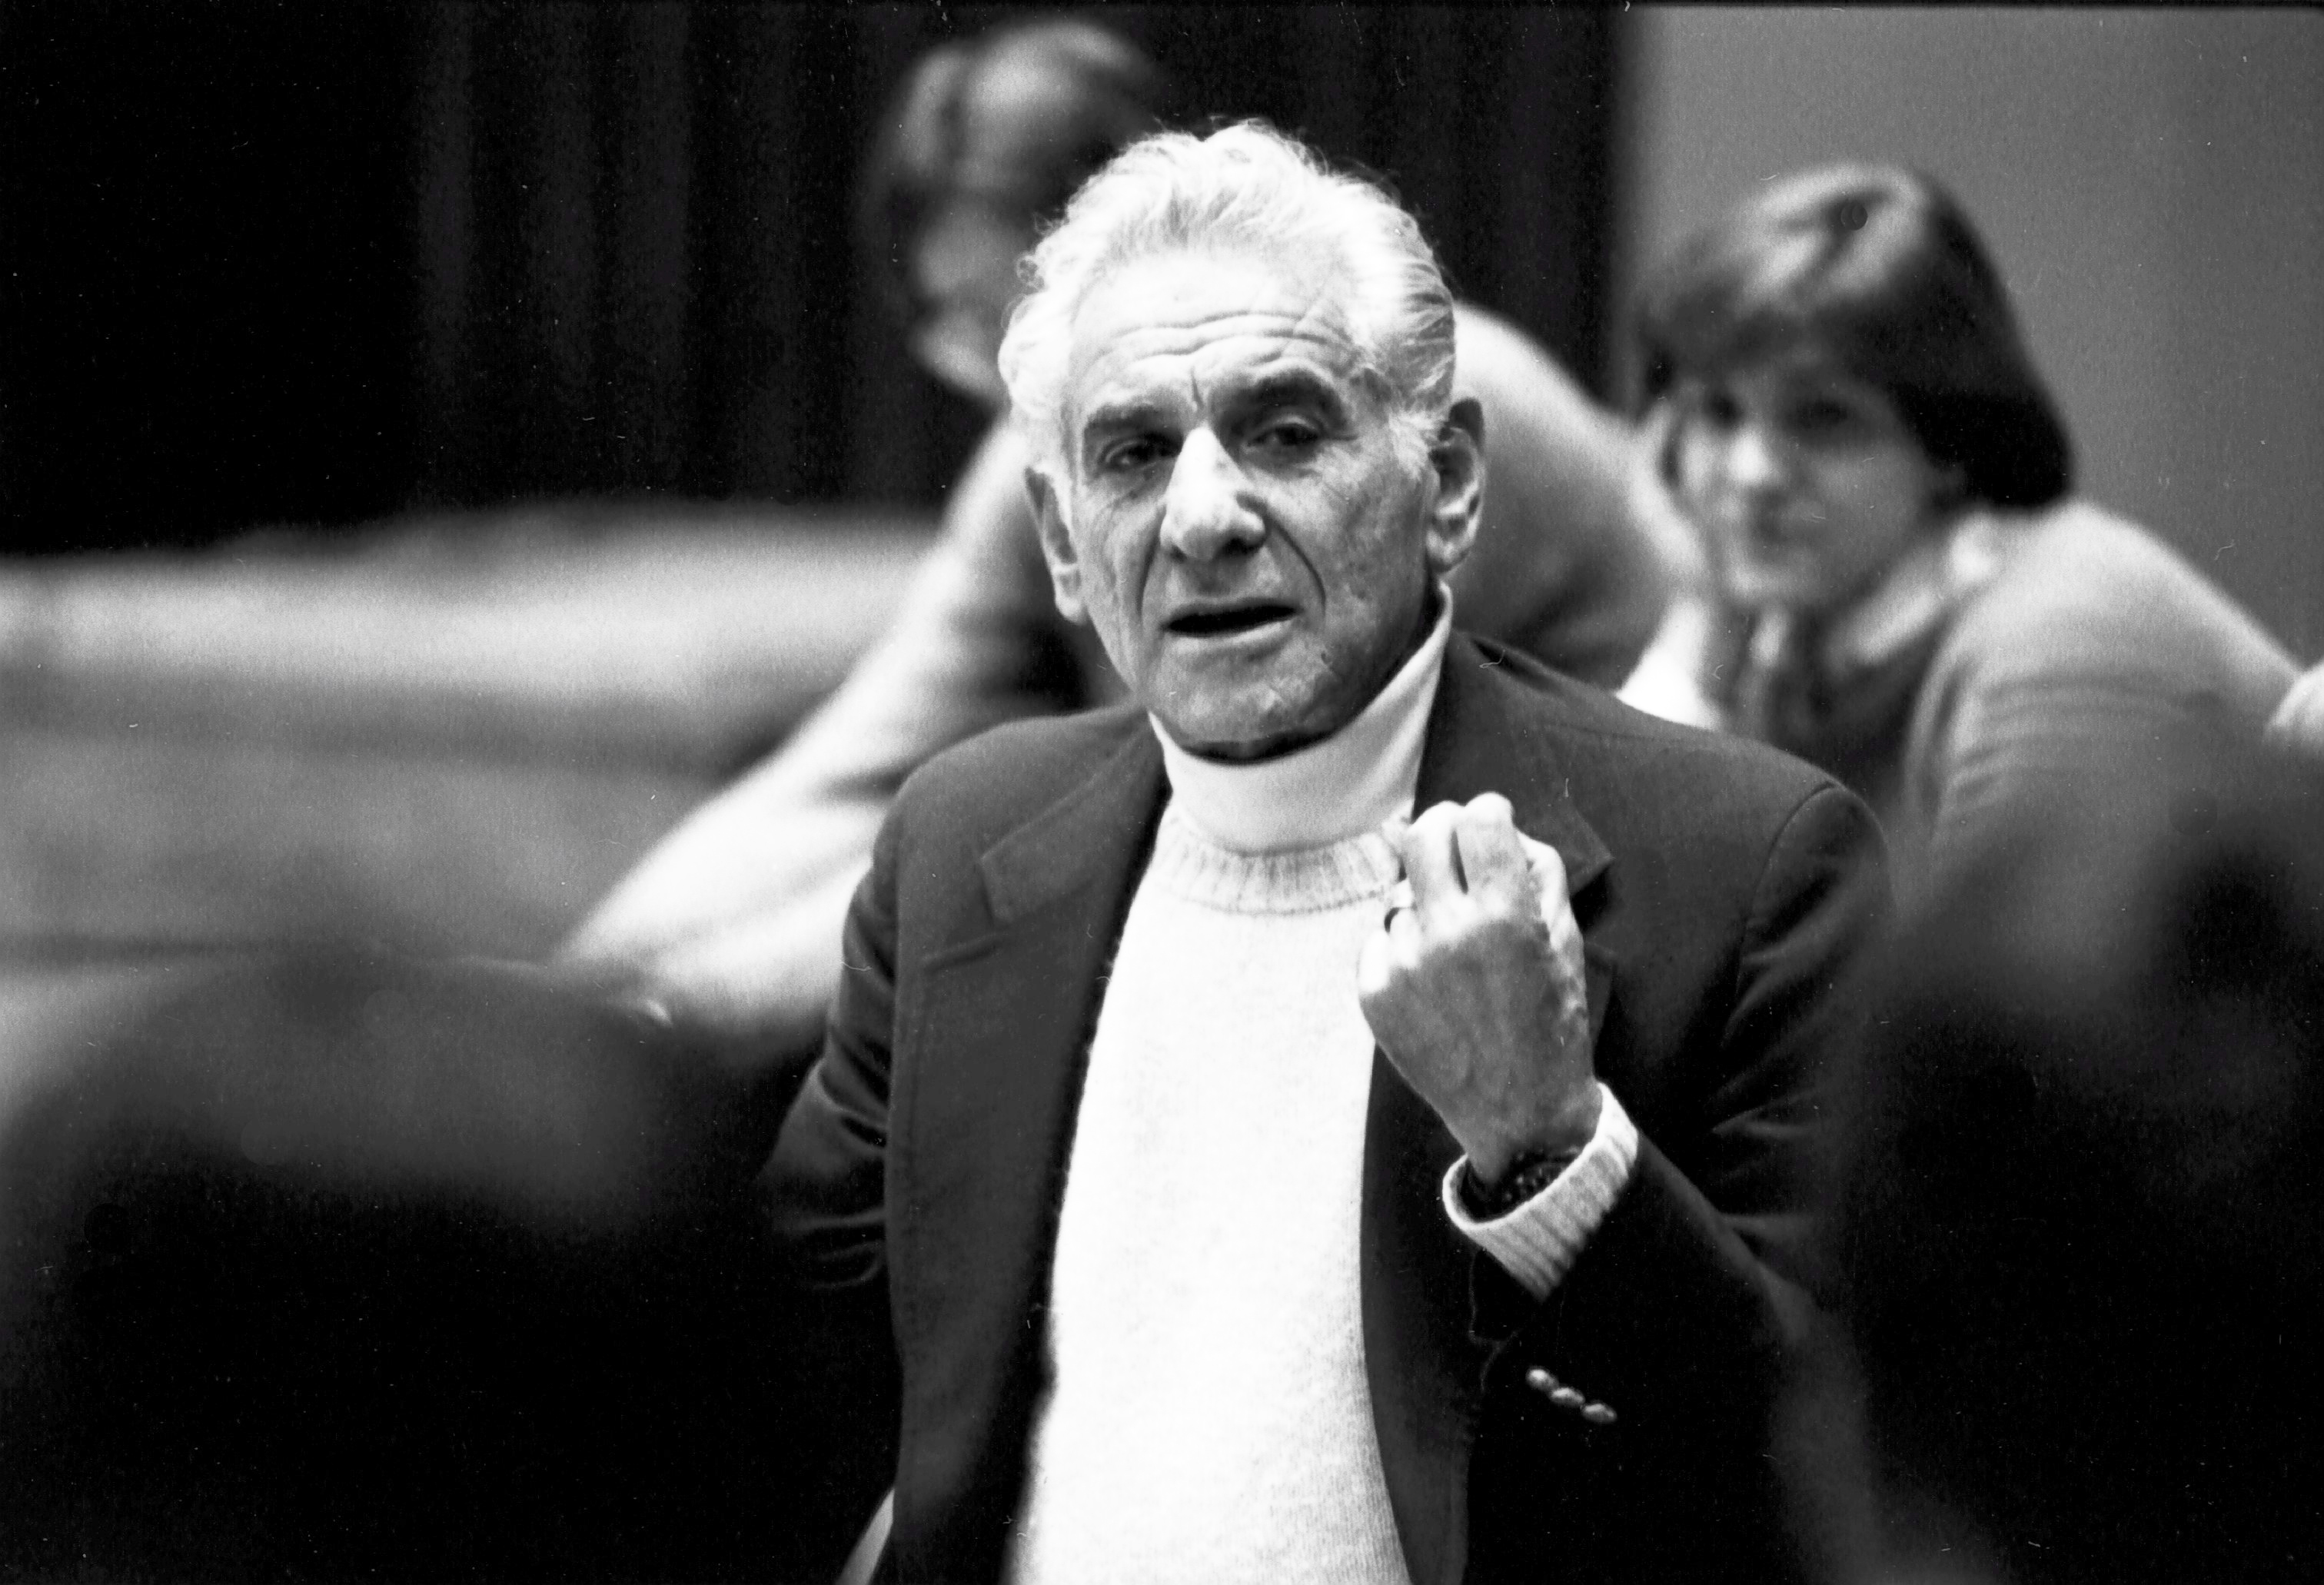 Jacobs School of Music offers virtual course on Leonard Bernstein: Folder  Name: Folder Name: Info: News: News & Events: Jacobs School of Music:  Indiana University Bloomington